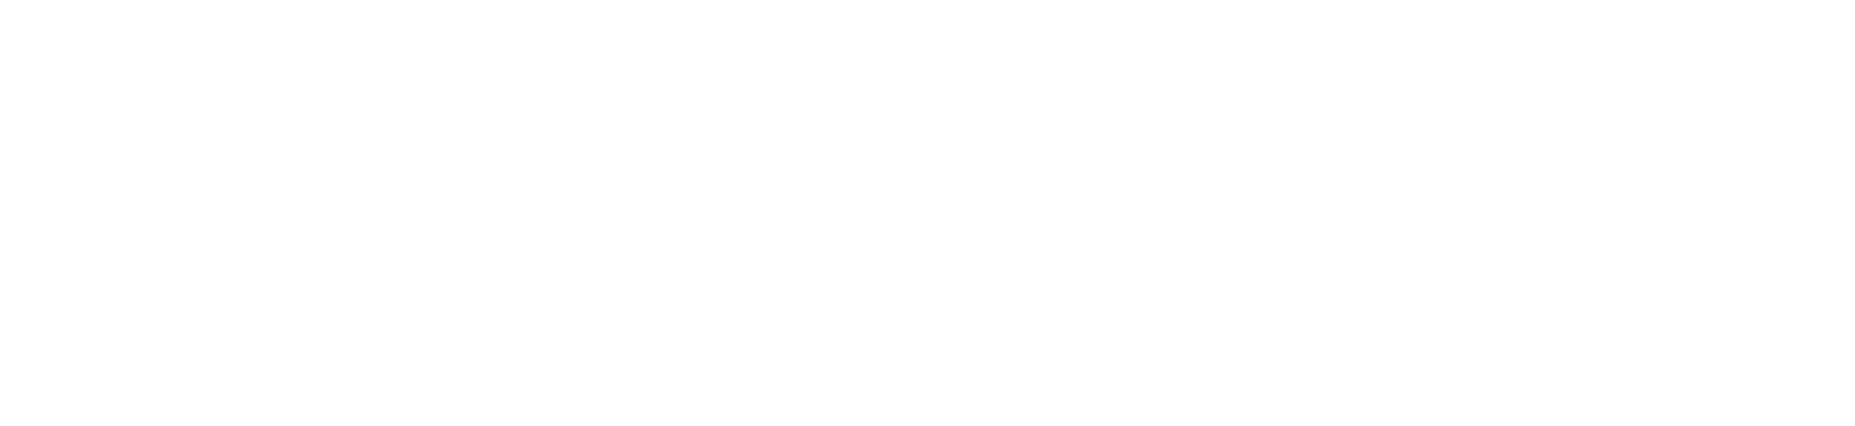 The Glenelg Country School logo in all white.